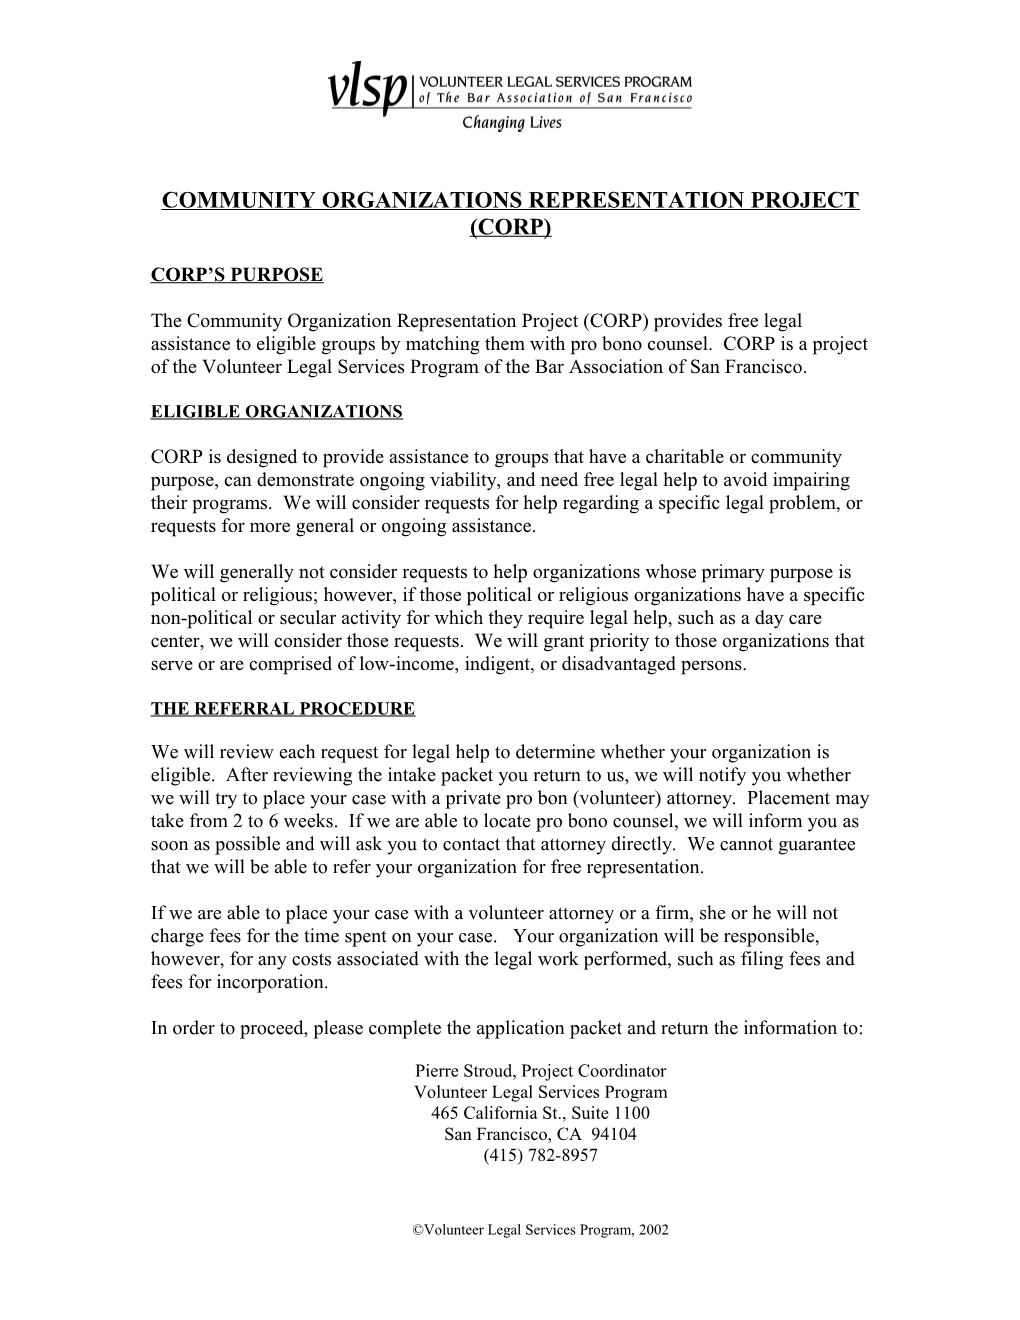 Community Organizations Representation Project (CORP)